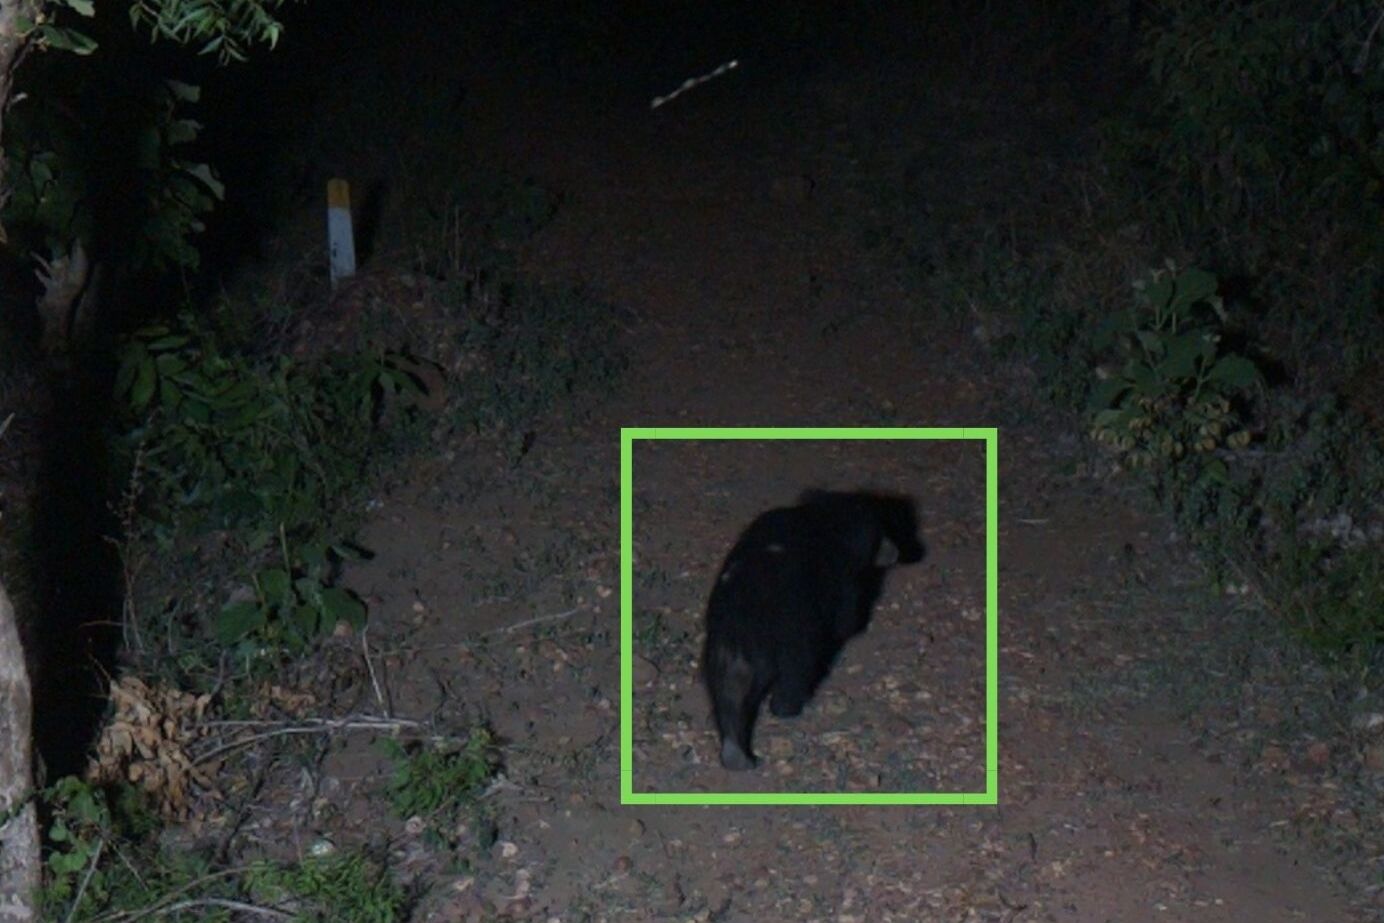 Wildlife Eye spots a bear during the night